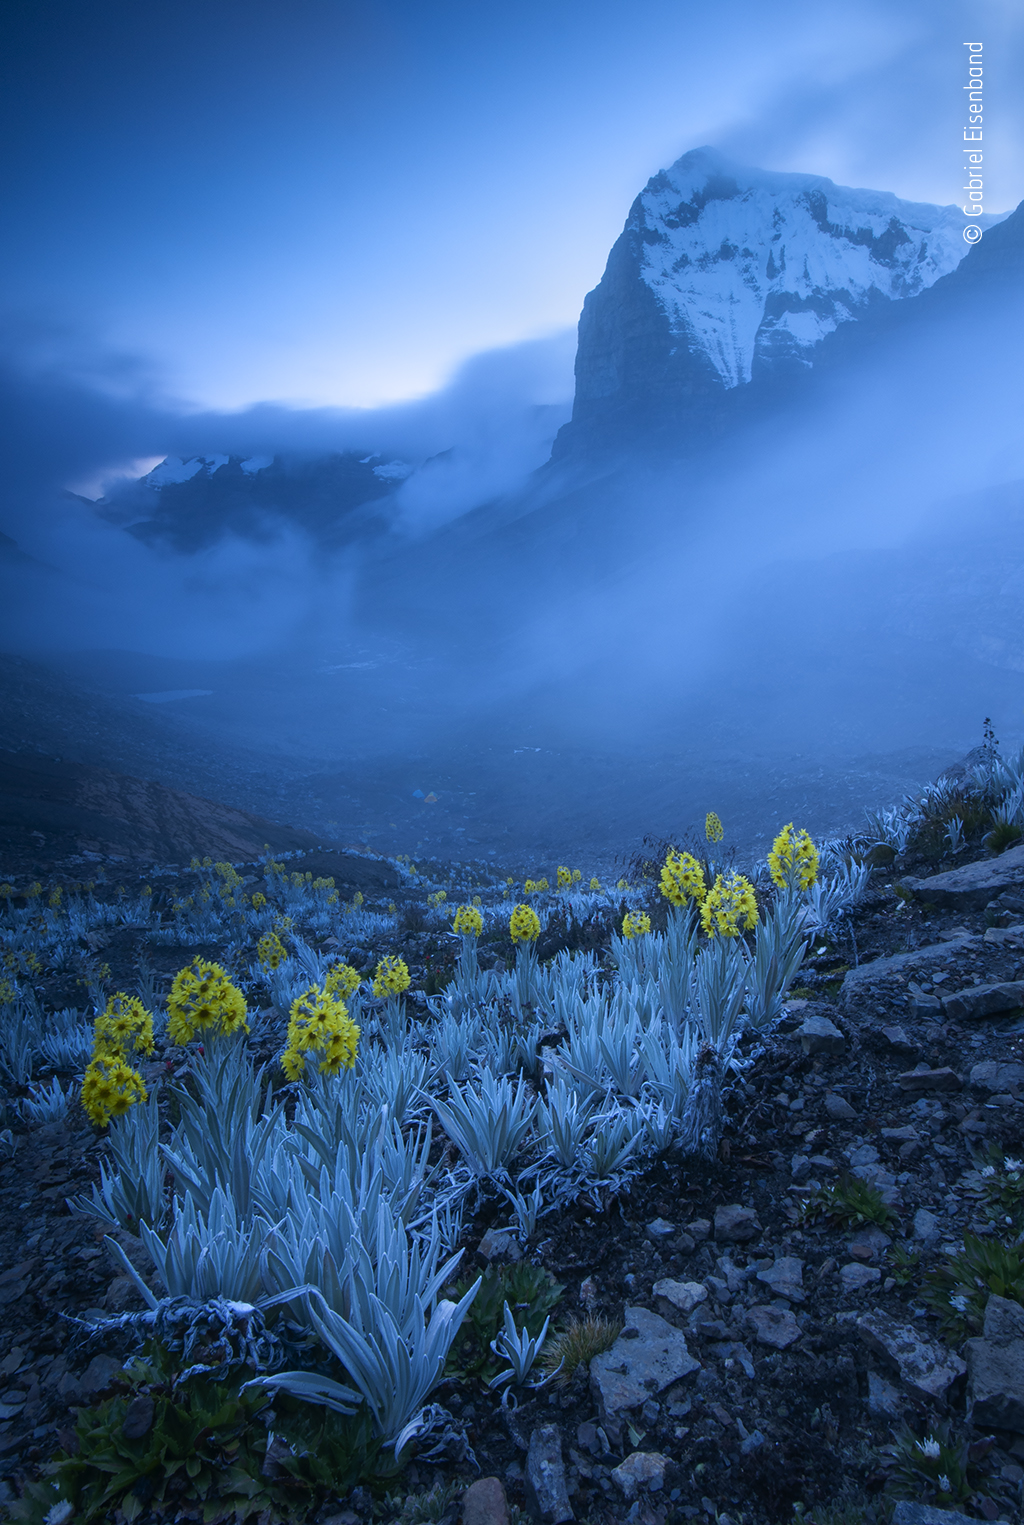 Rare yellow daisies on a cold mountain peak.